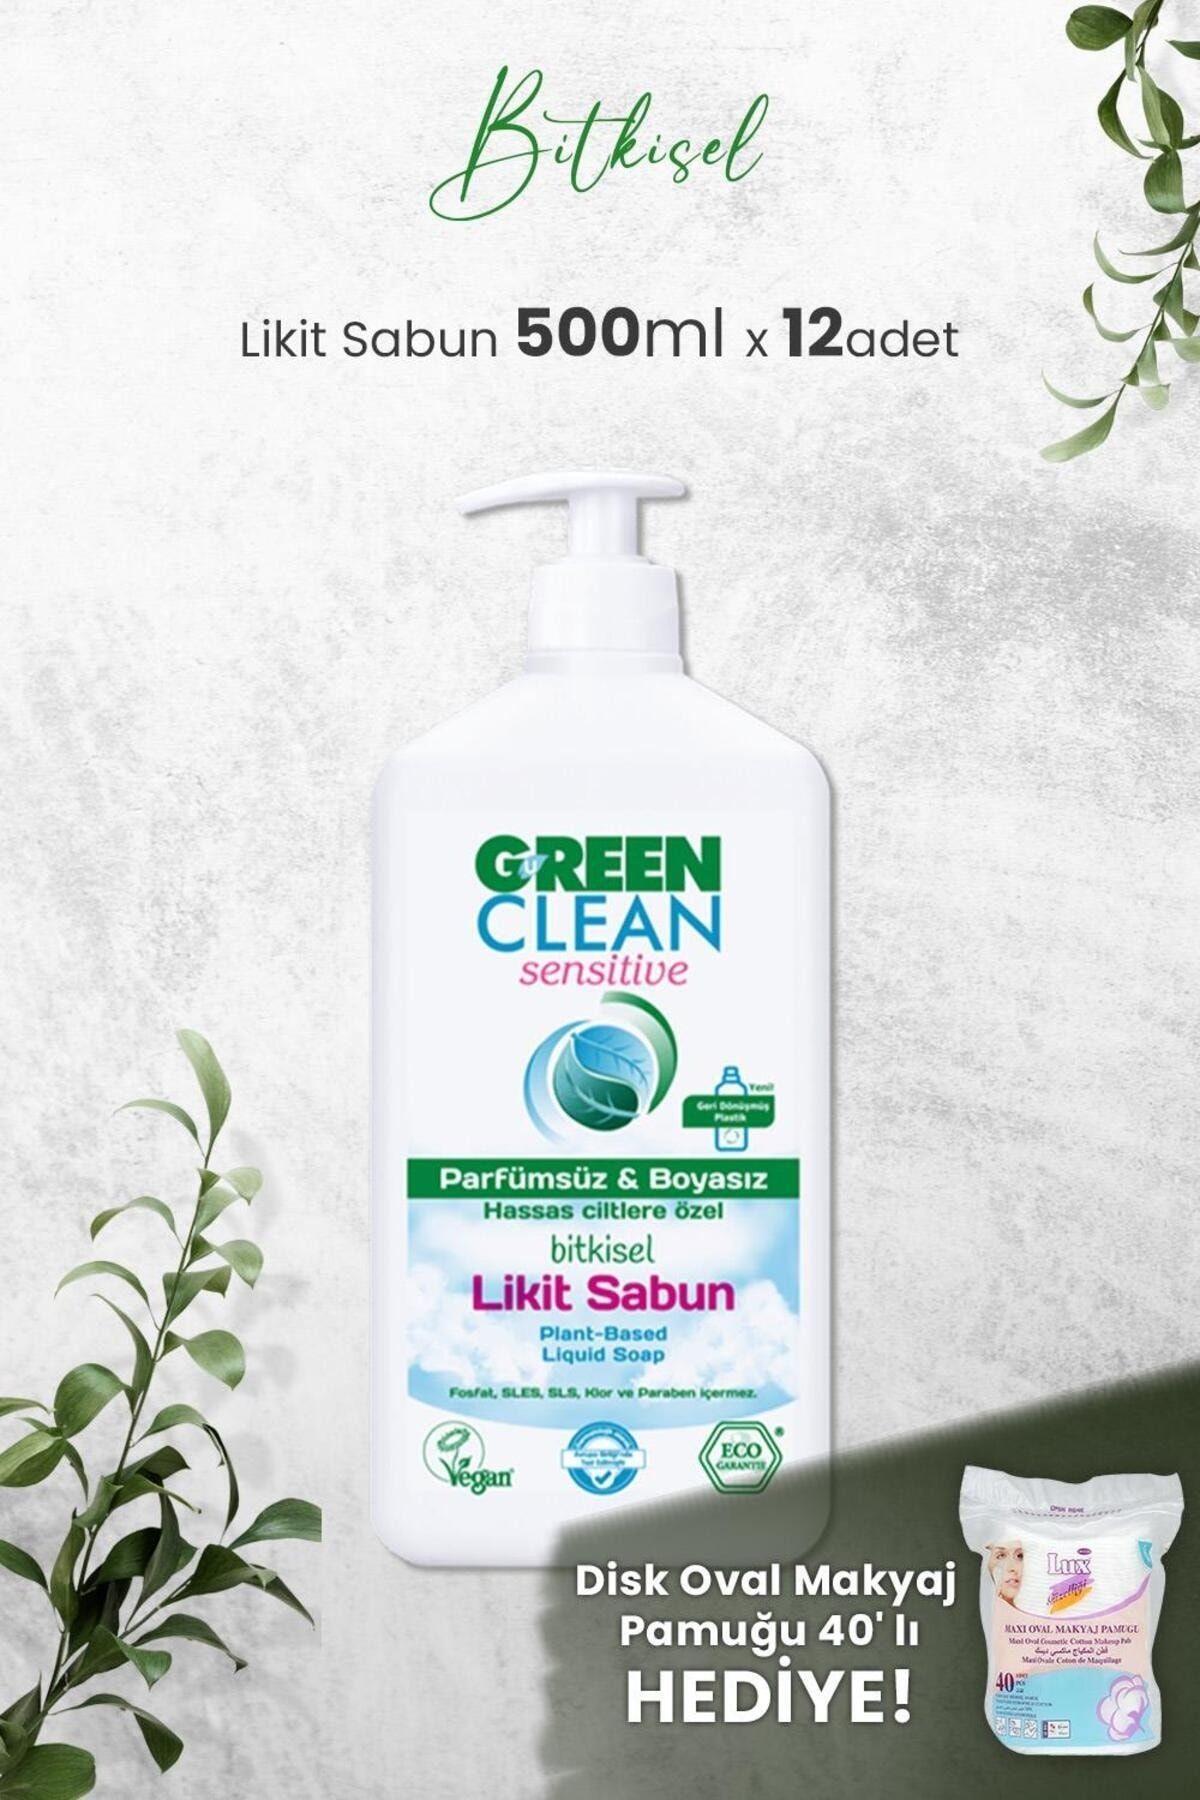 Green Clean Organik Kokusuz Likit Sensitive Sabun 500 ml x 12 Adet ve Hediyeli